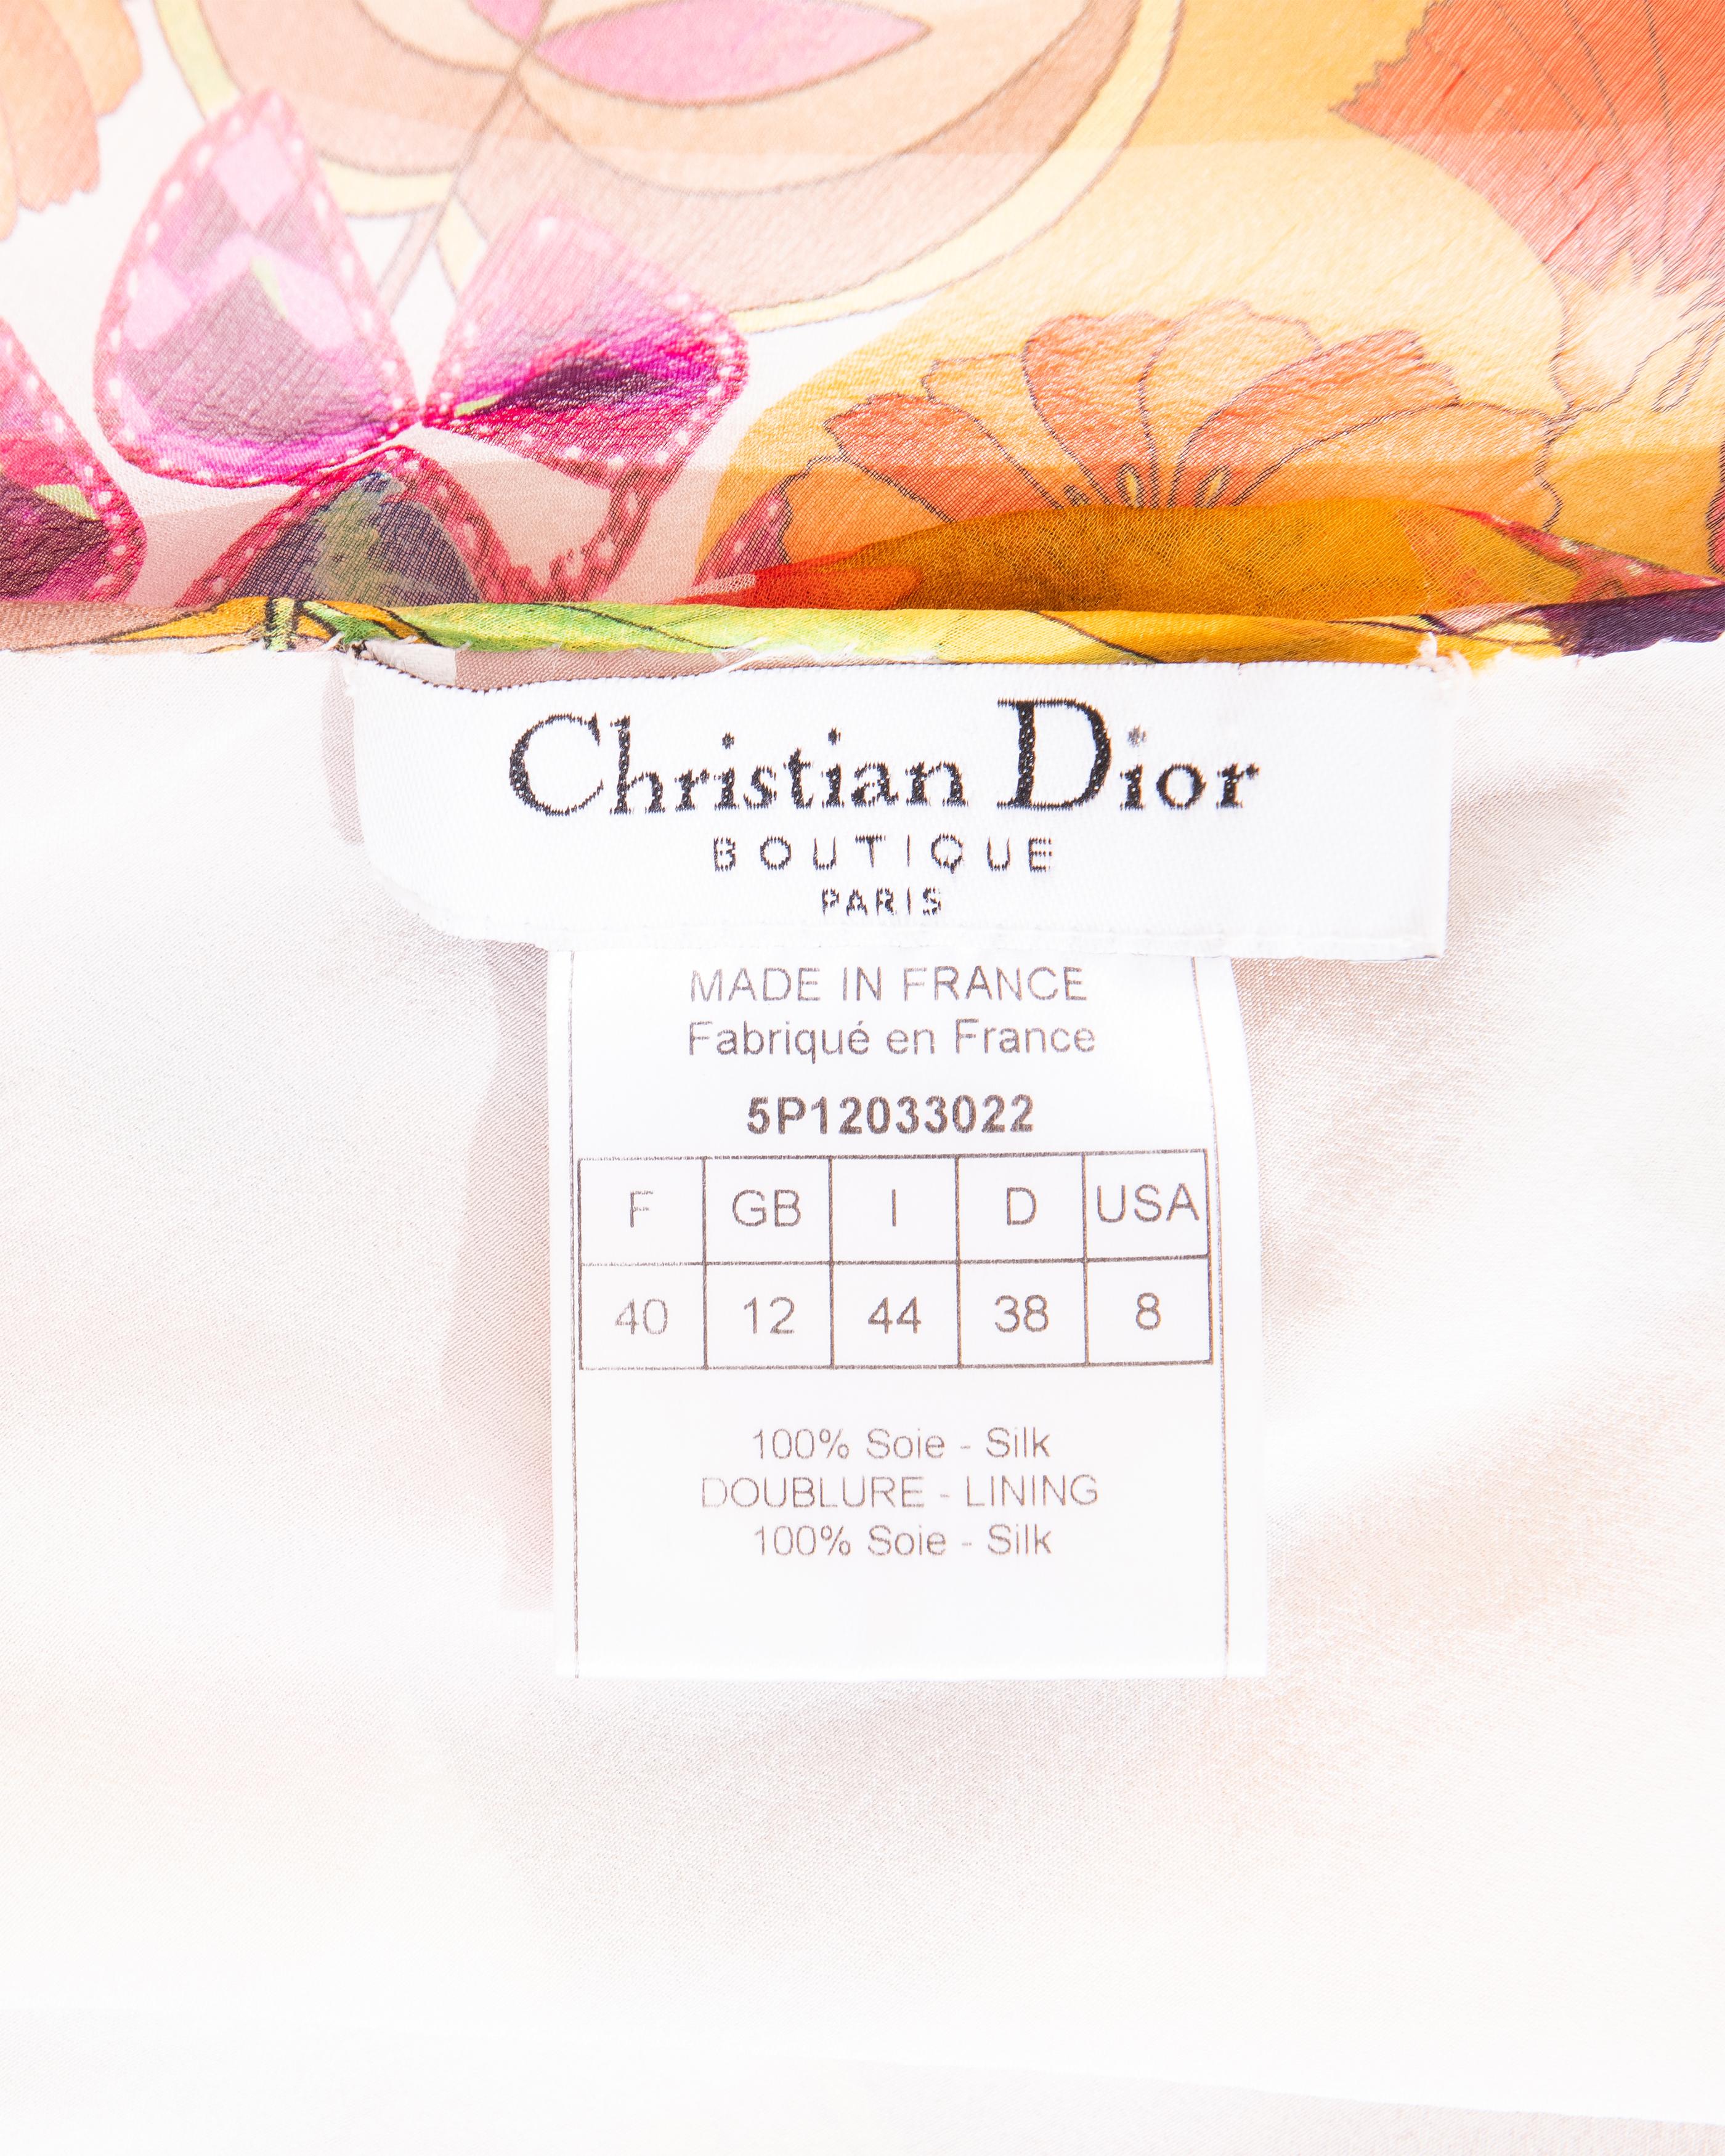 S/S 2005 Christian Dior by John Galliano Floral Print Asymmetrical Silk Skirt 8